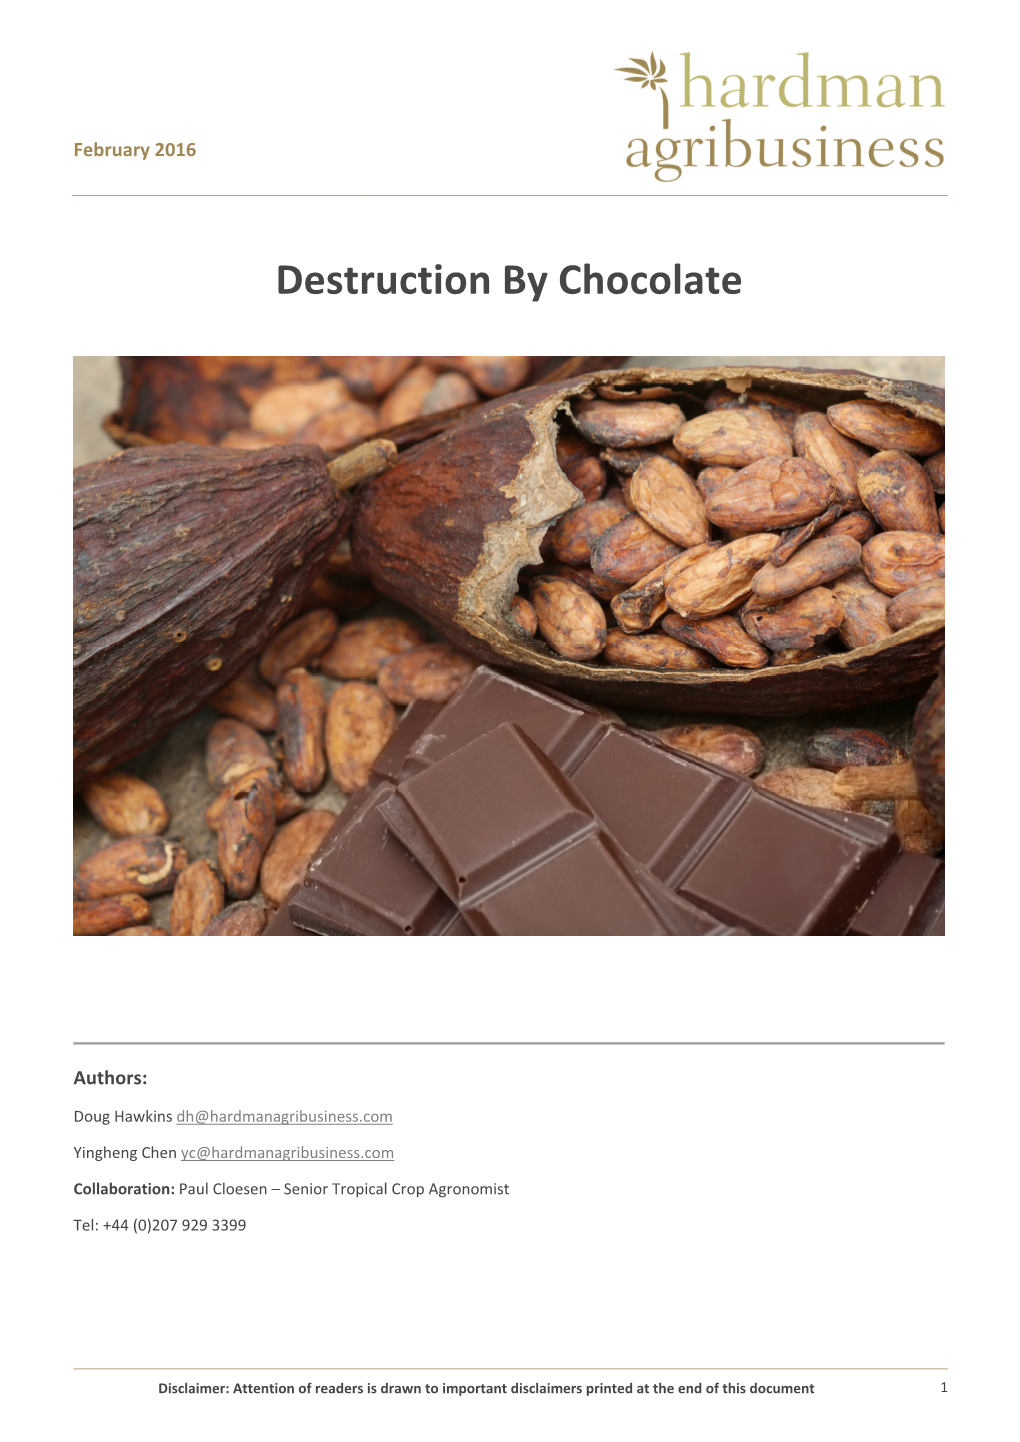 Destruction by Chocolate